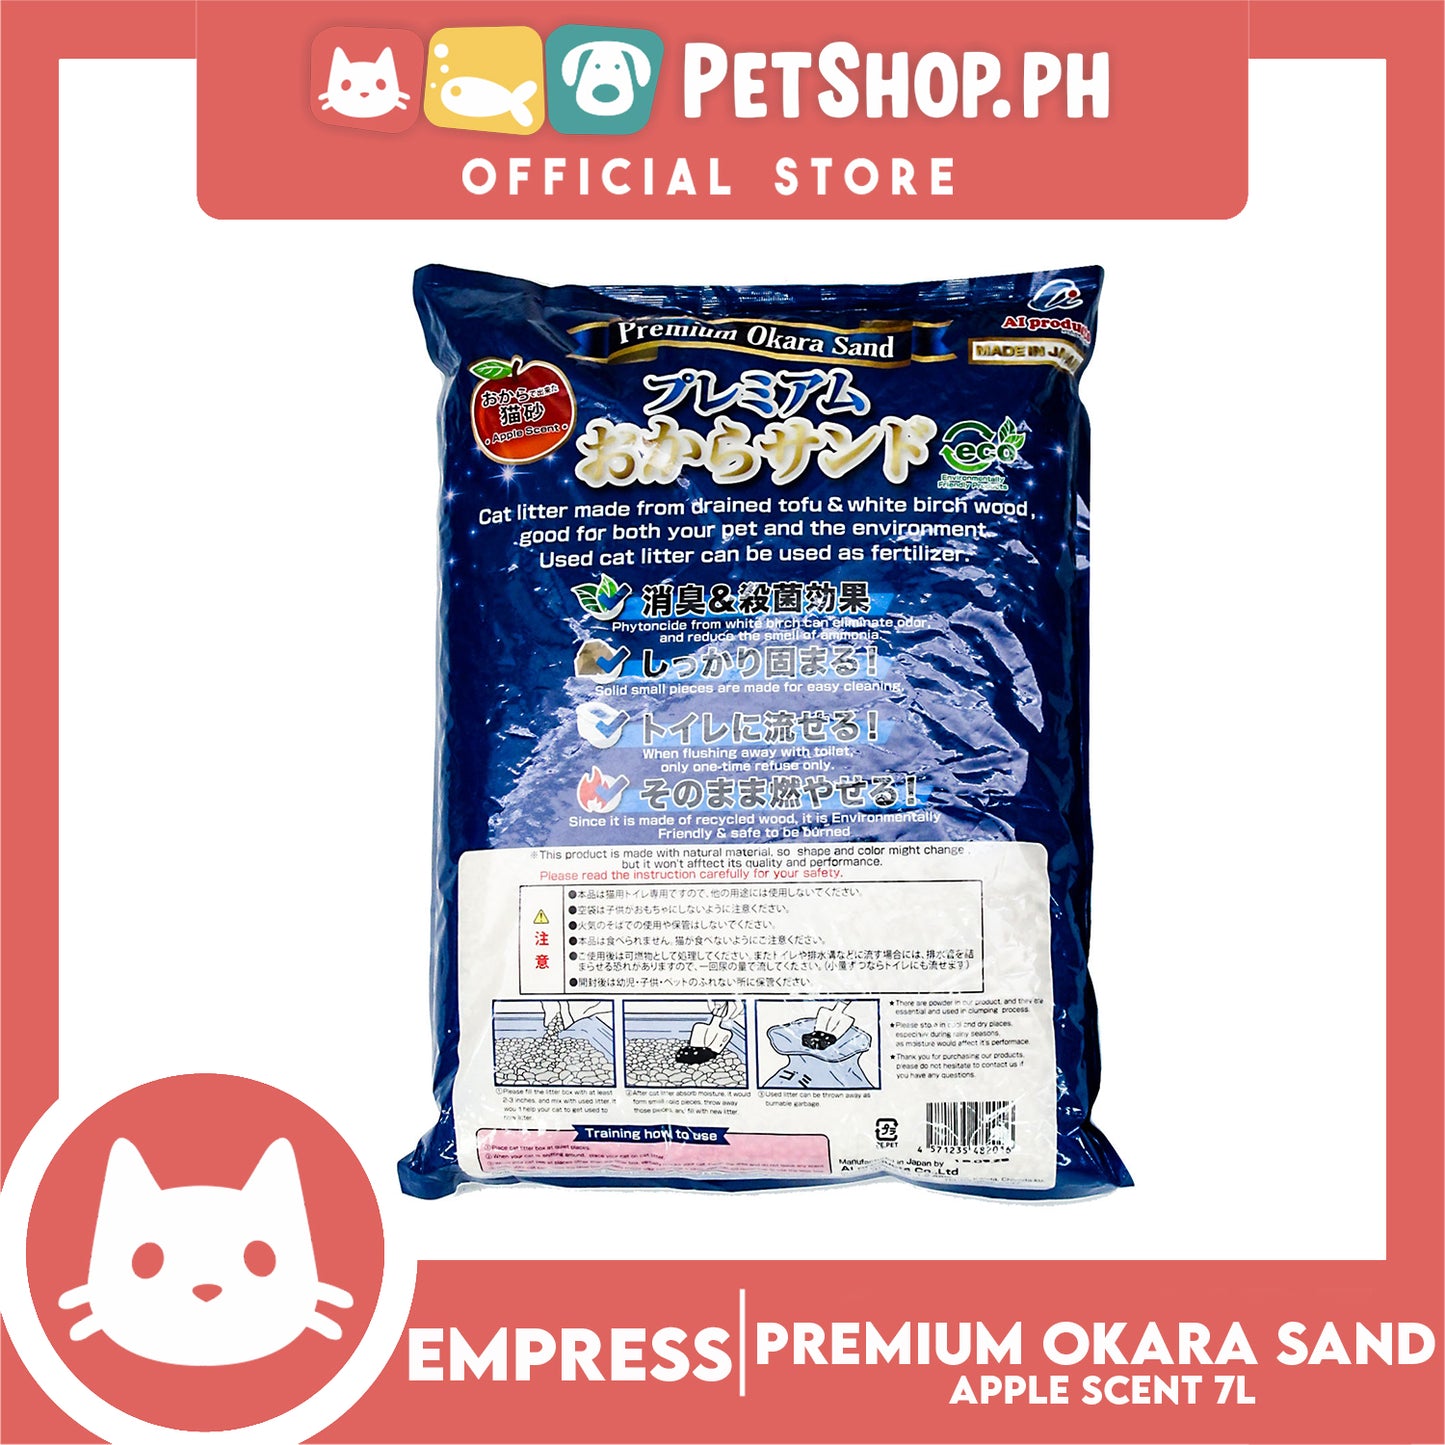 Empress Premium Okara 7 Liters (Apple Scent) Extra-Ordinary Absorption And Odor Control, Flushable Cat Litter